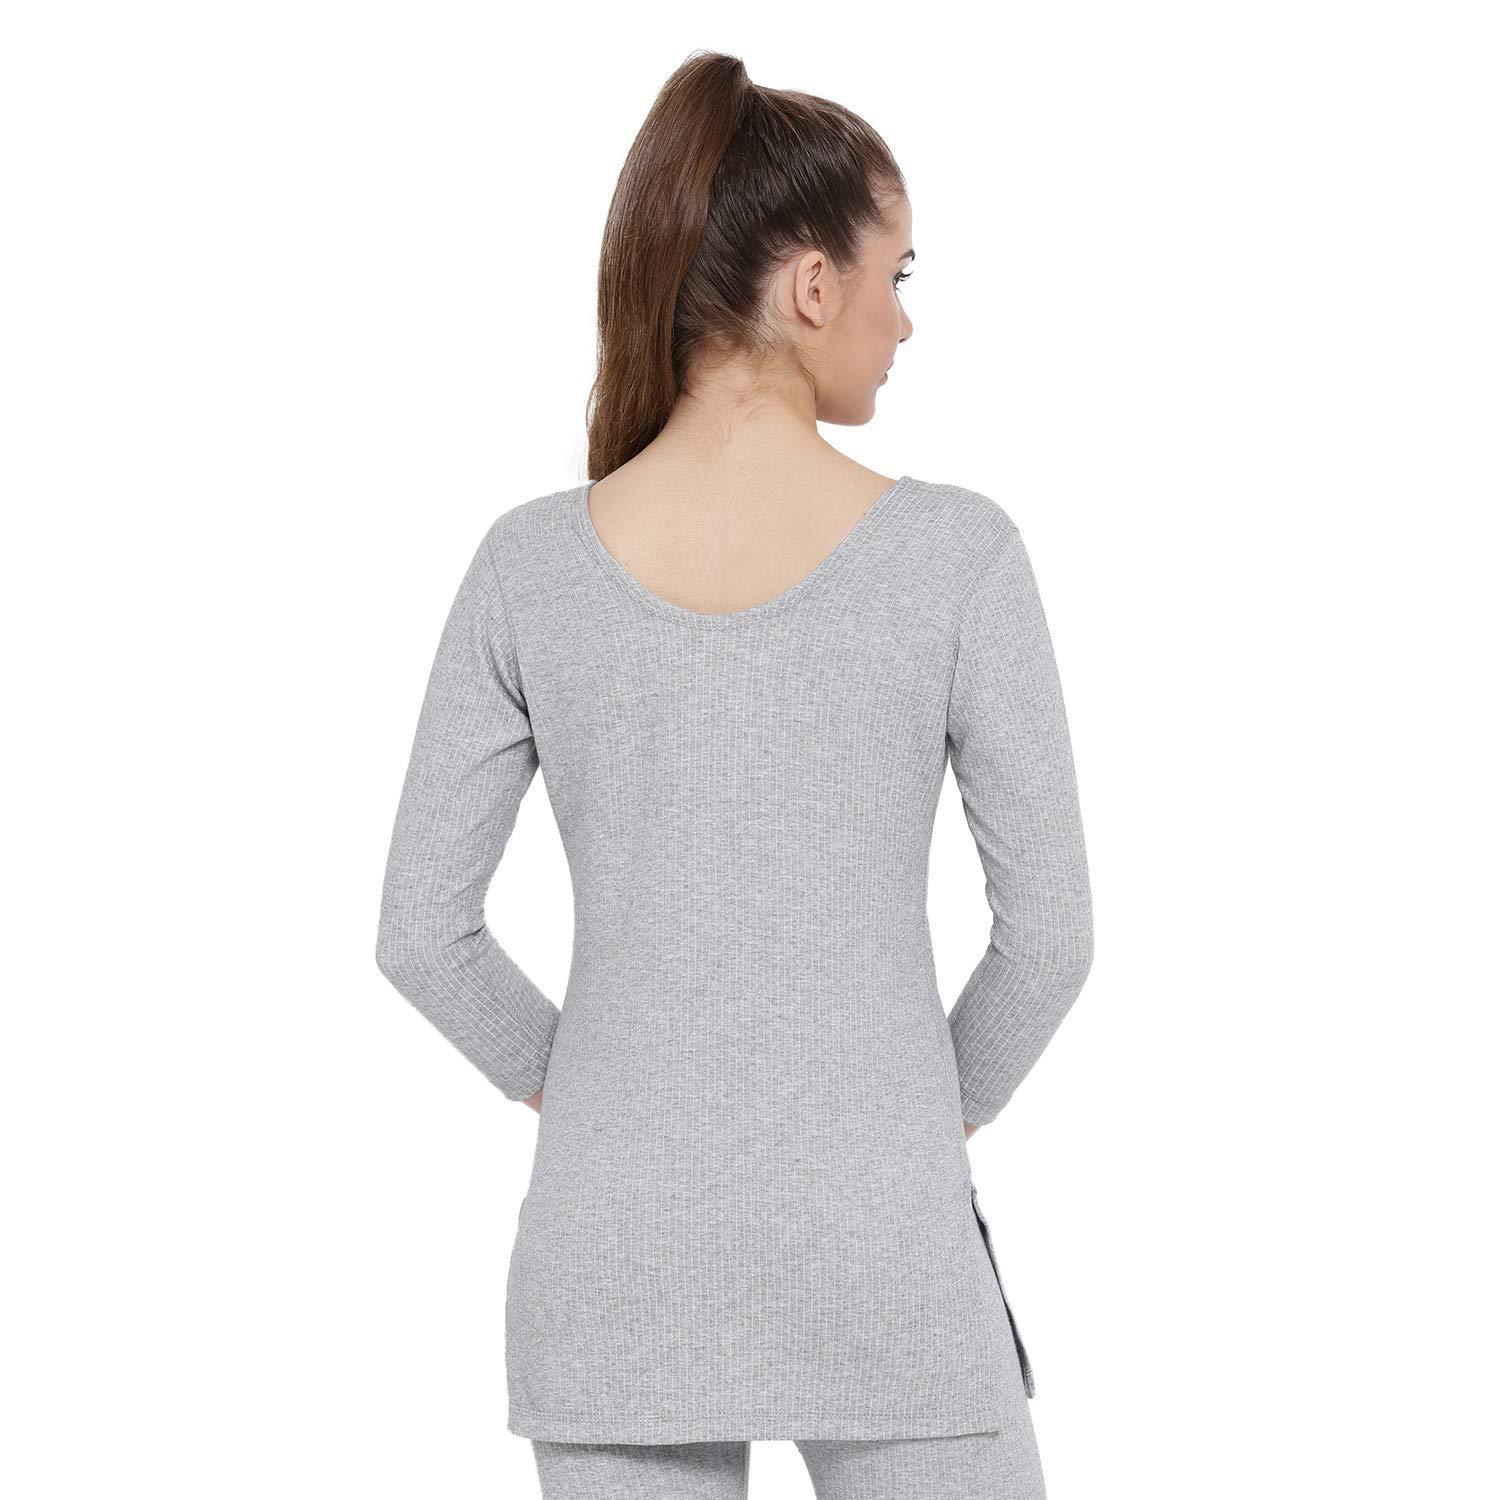 Monte Carlo Grey Cotton Thermal Warmer Winter Wear Top for Ladies - Stilento